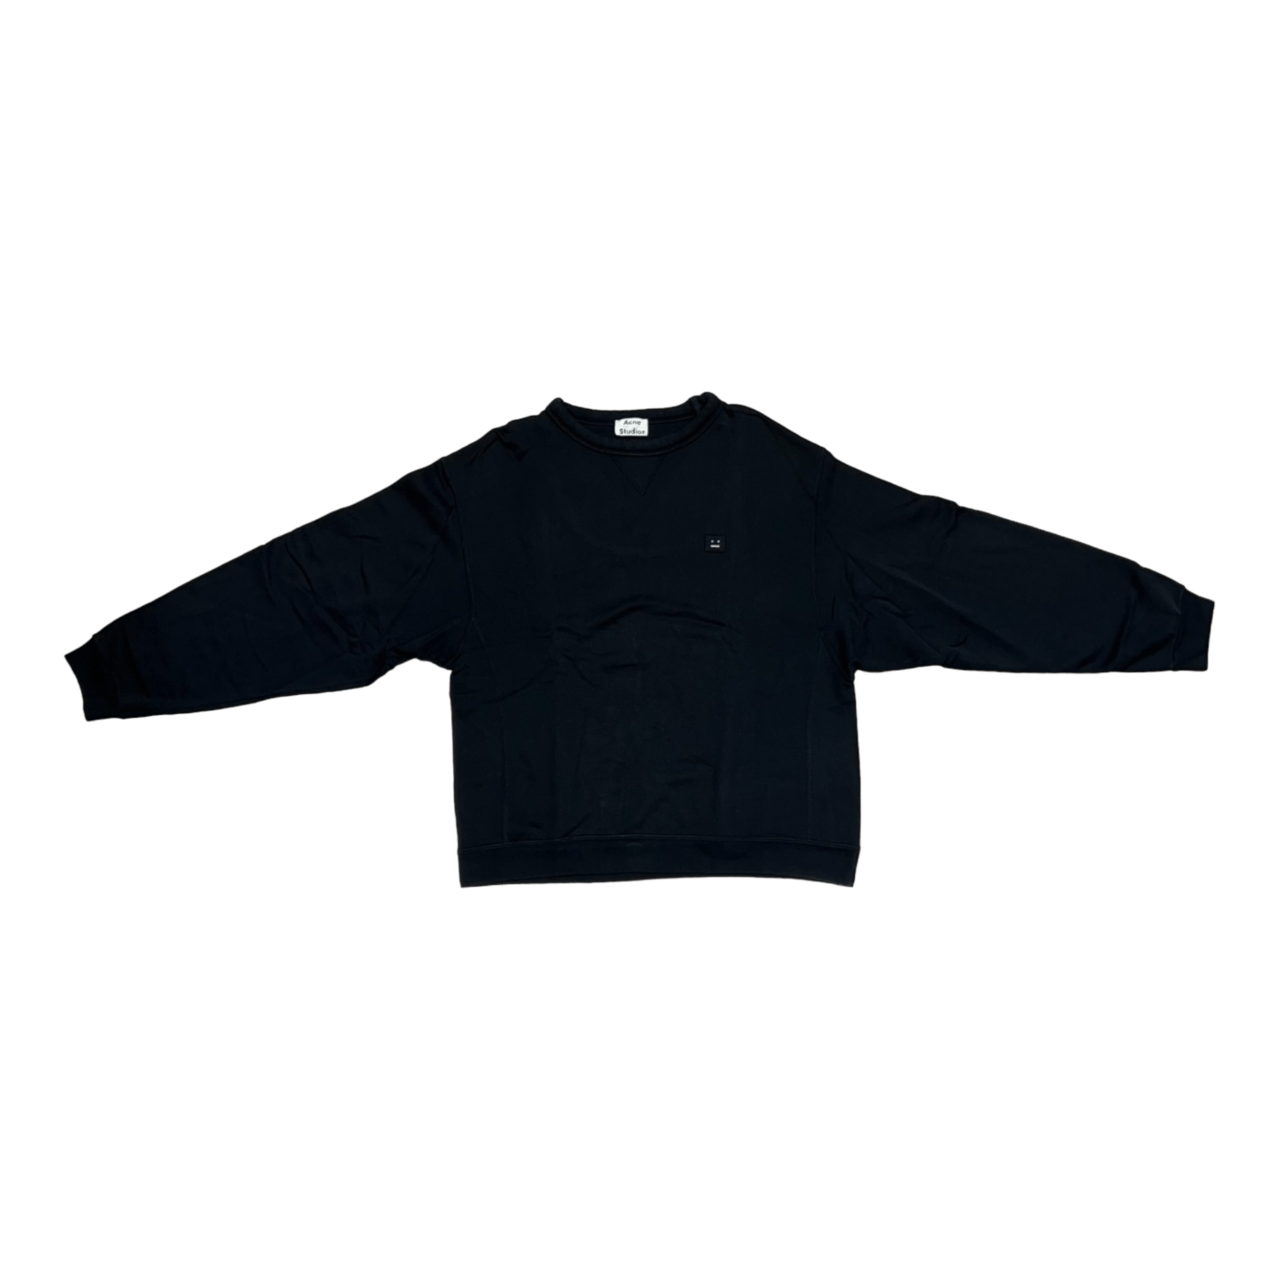 Acne Studios Black Sweater